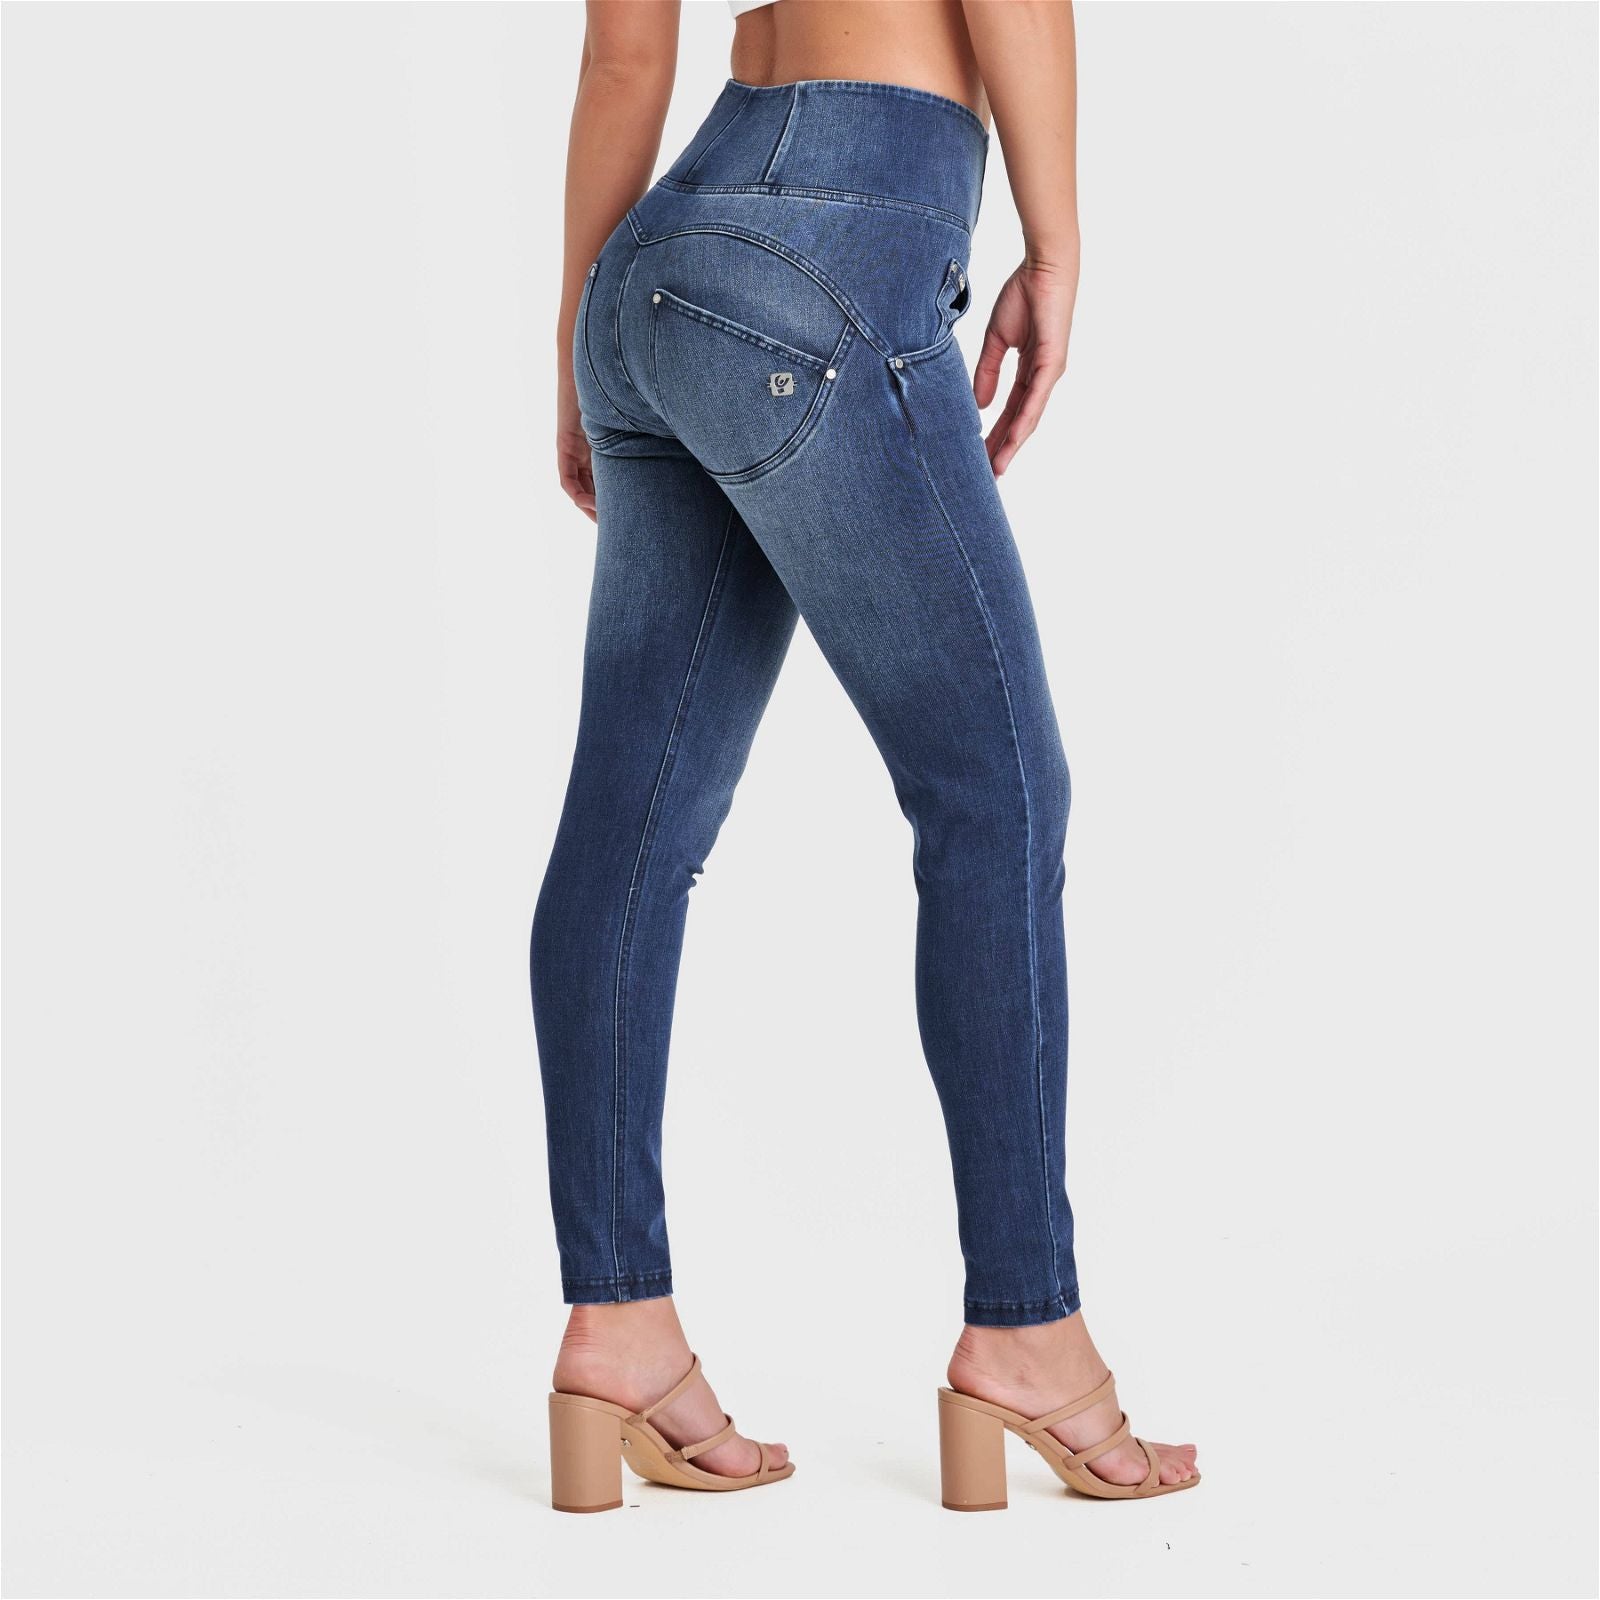 WR.UP® SNUG Jeans - High Waisted - Full Length - Dark Blue + Blue Stitching 2